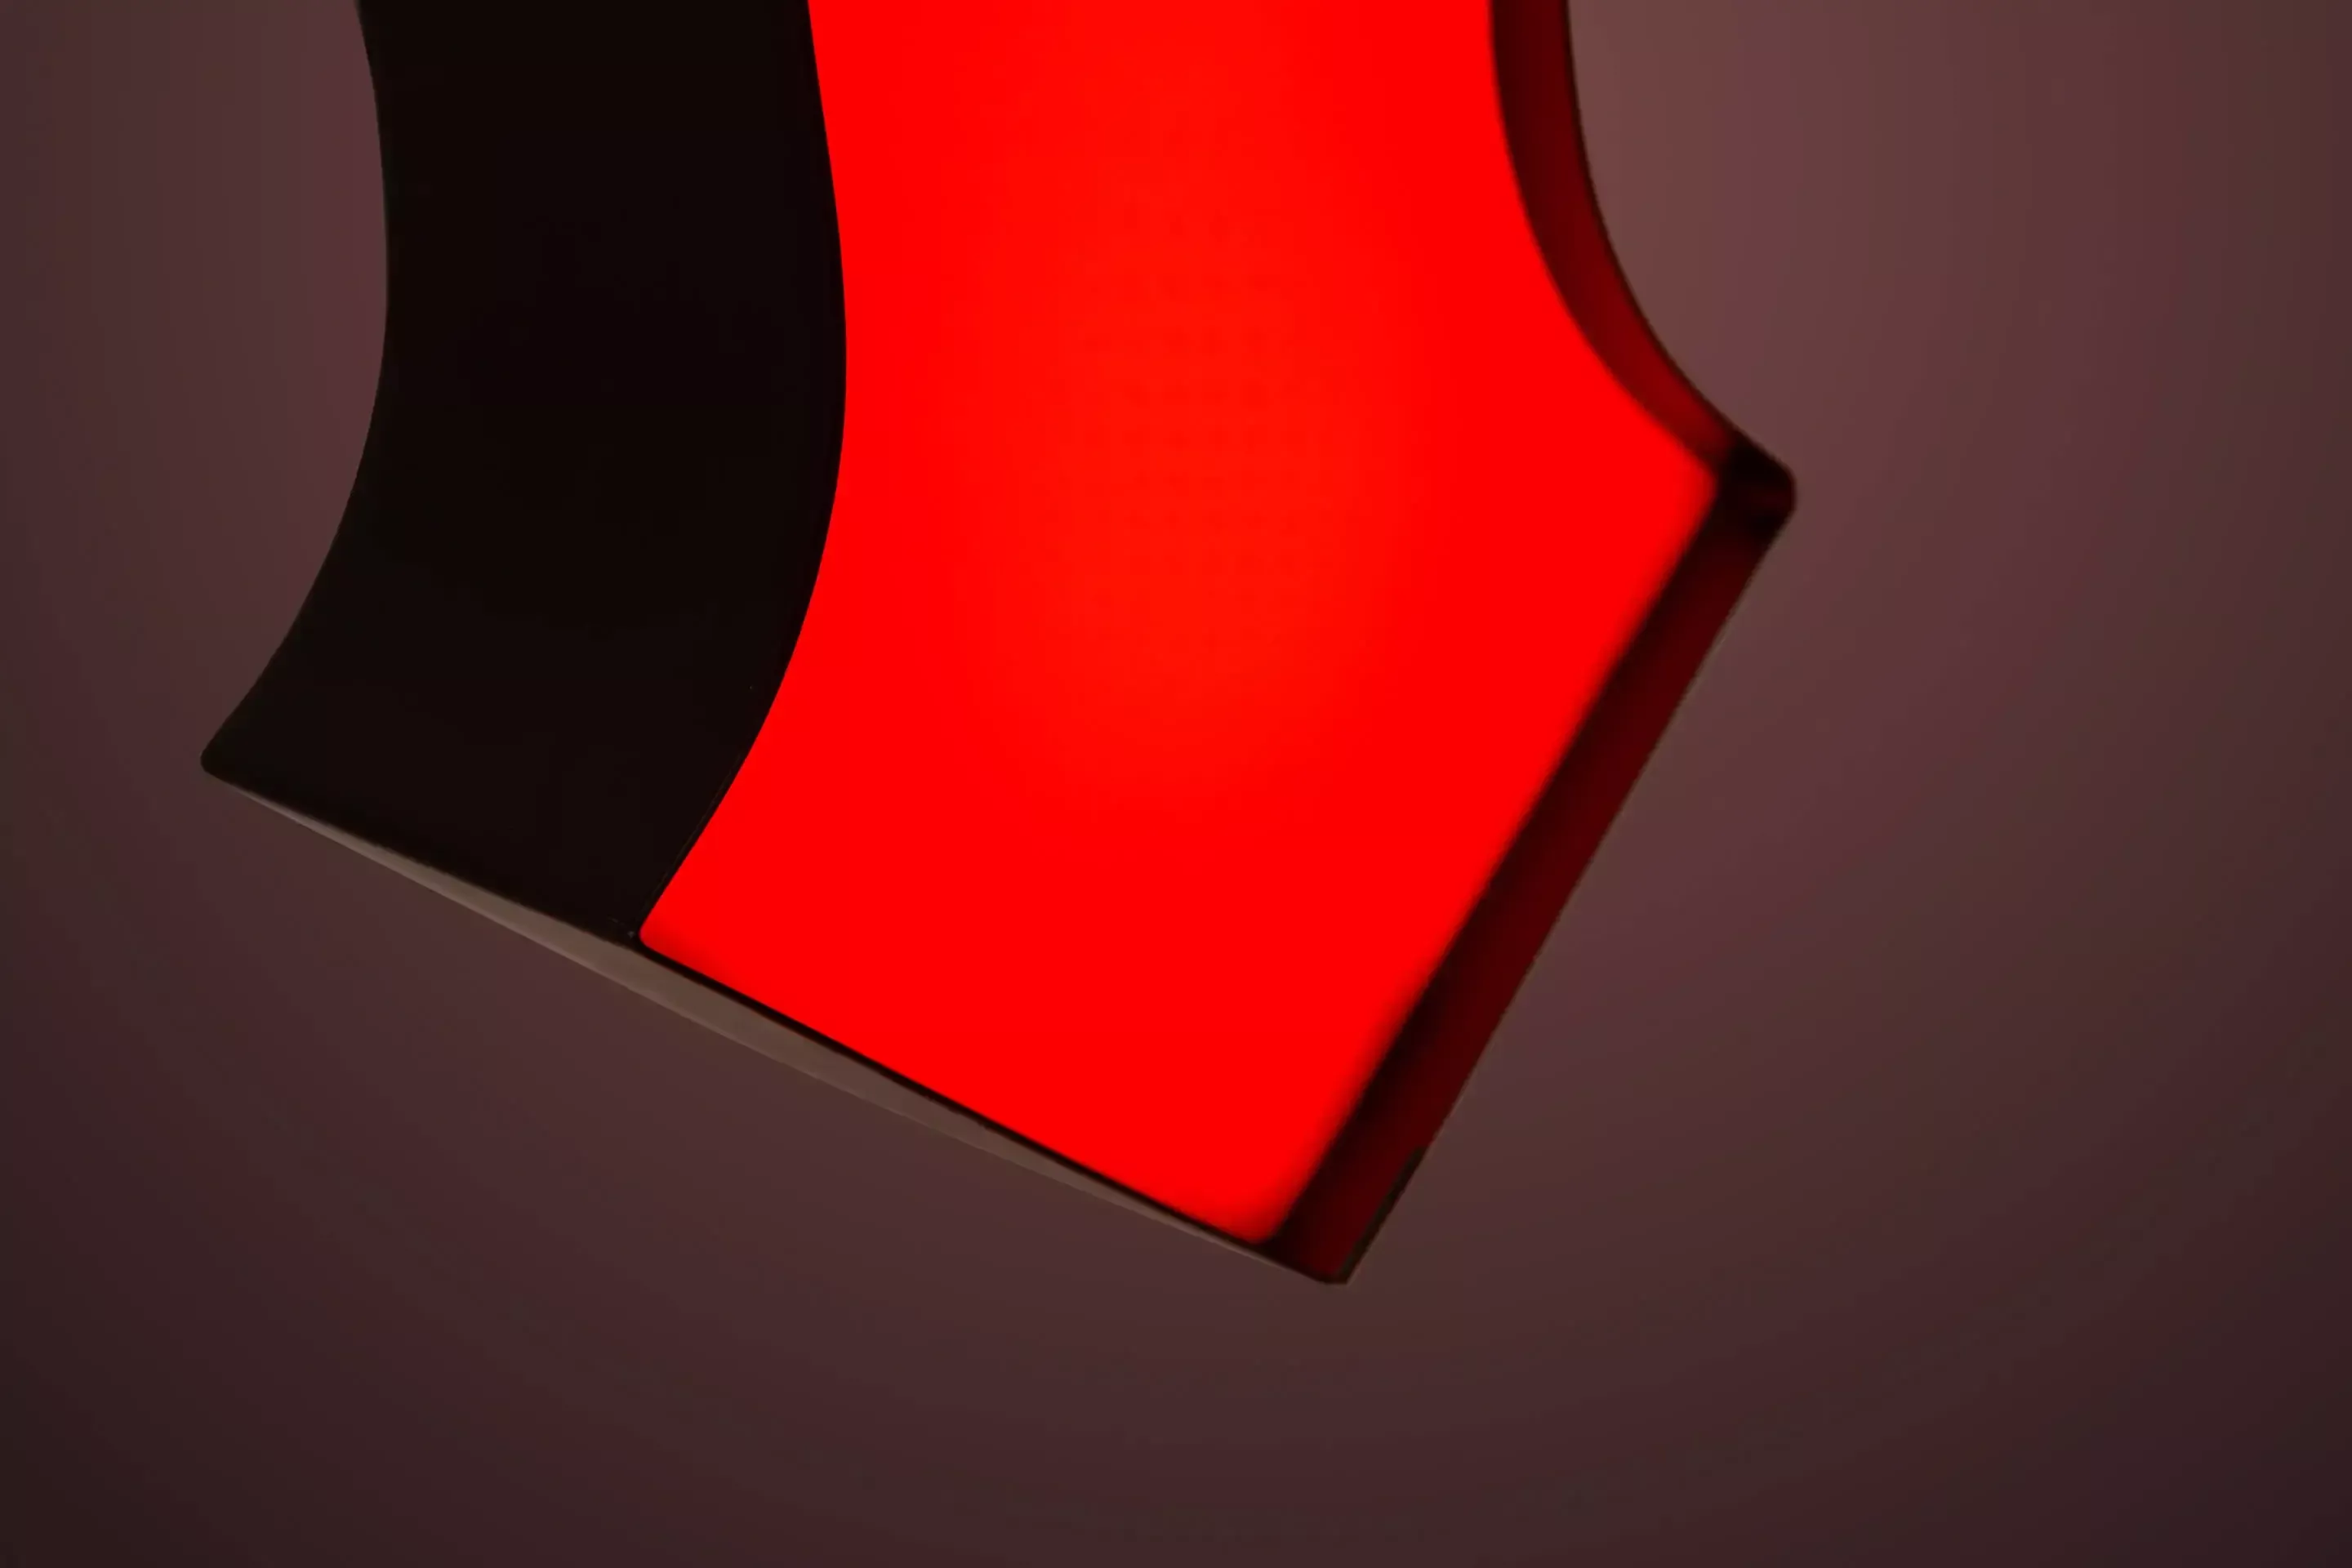 Buchstabe M - LED-Leuchtbuchstabe in rot, Detail